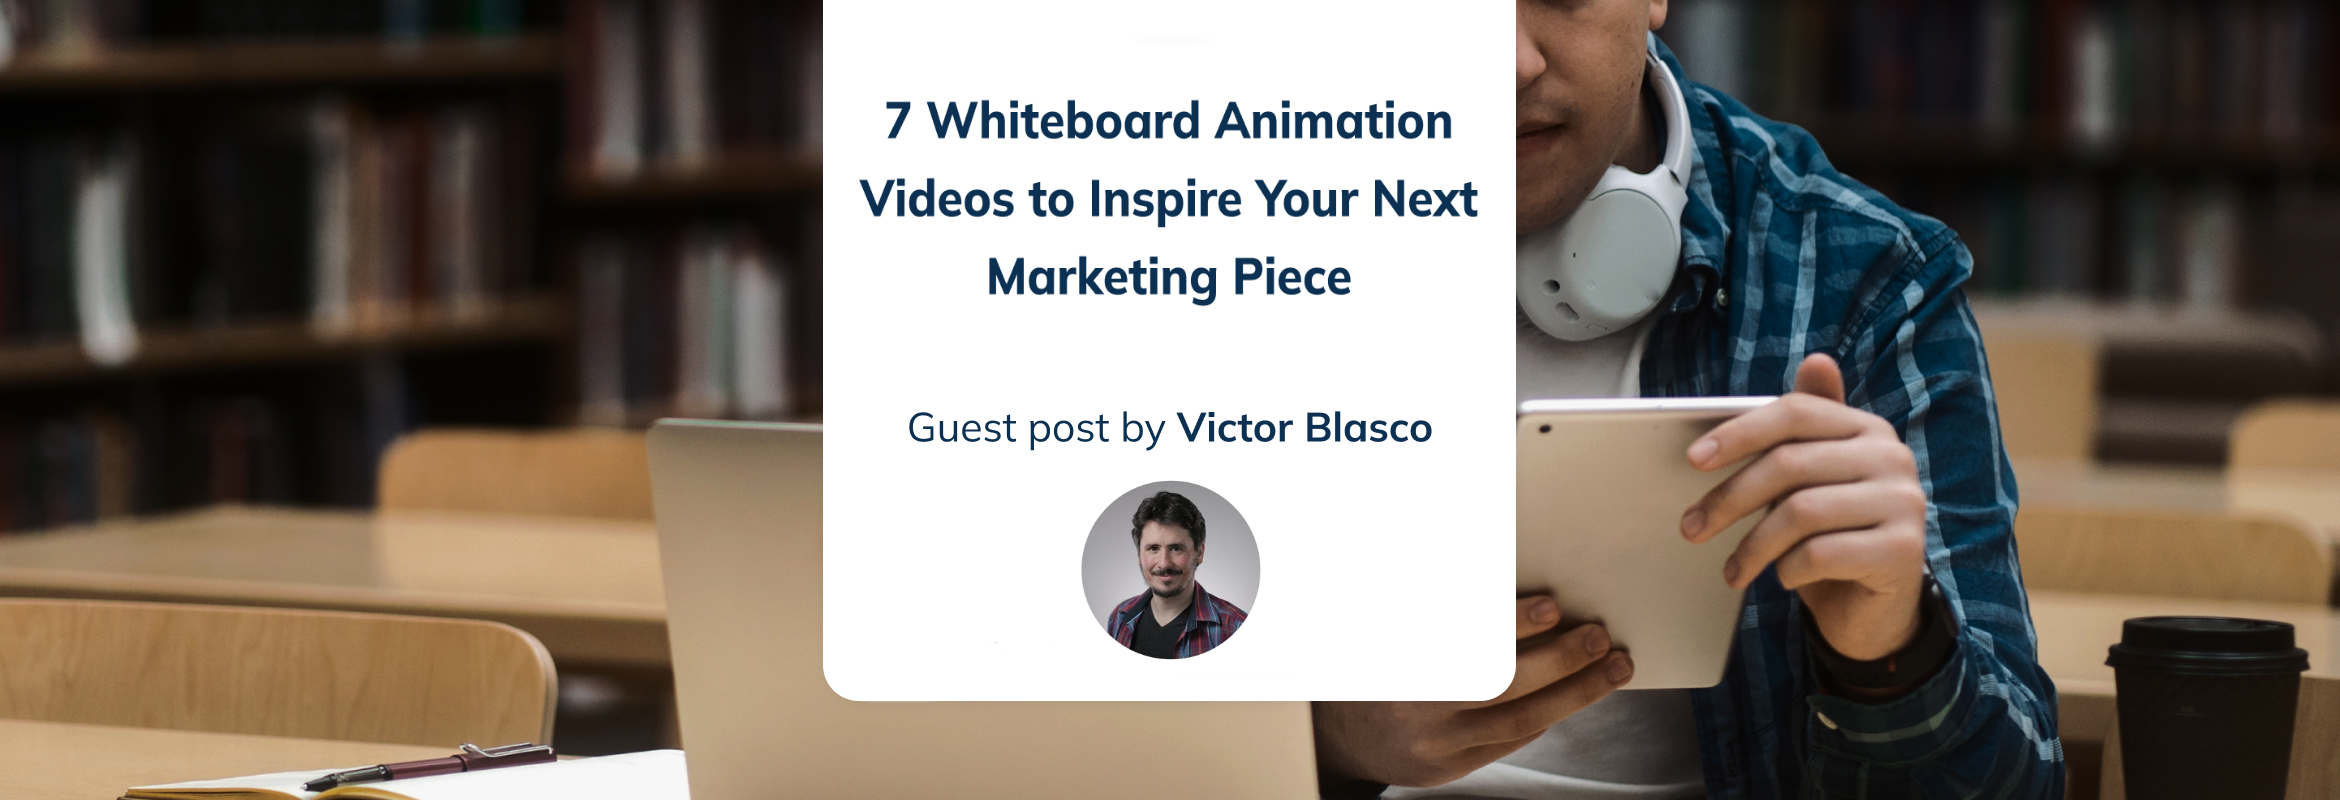 7 Whiteboard Animation videos